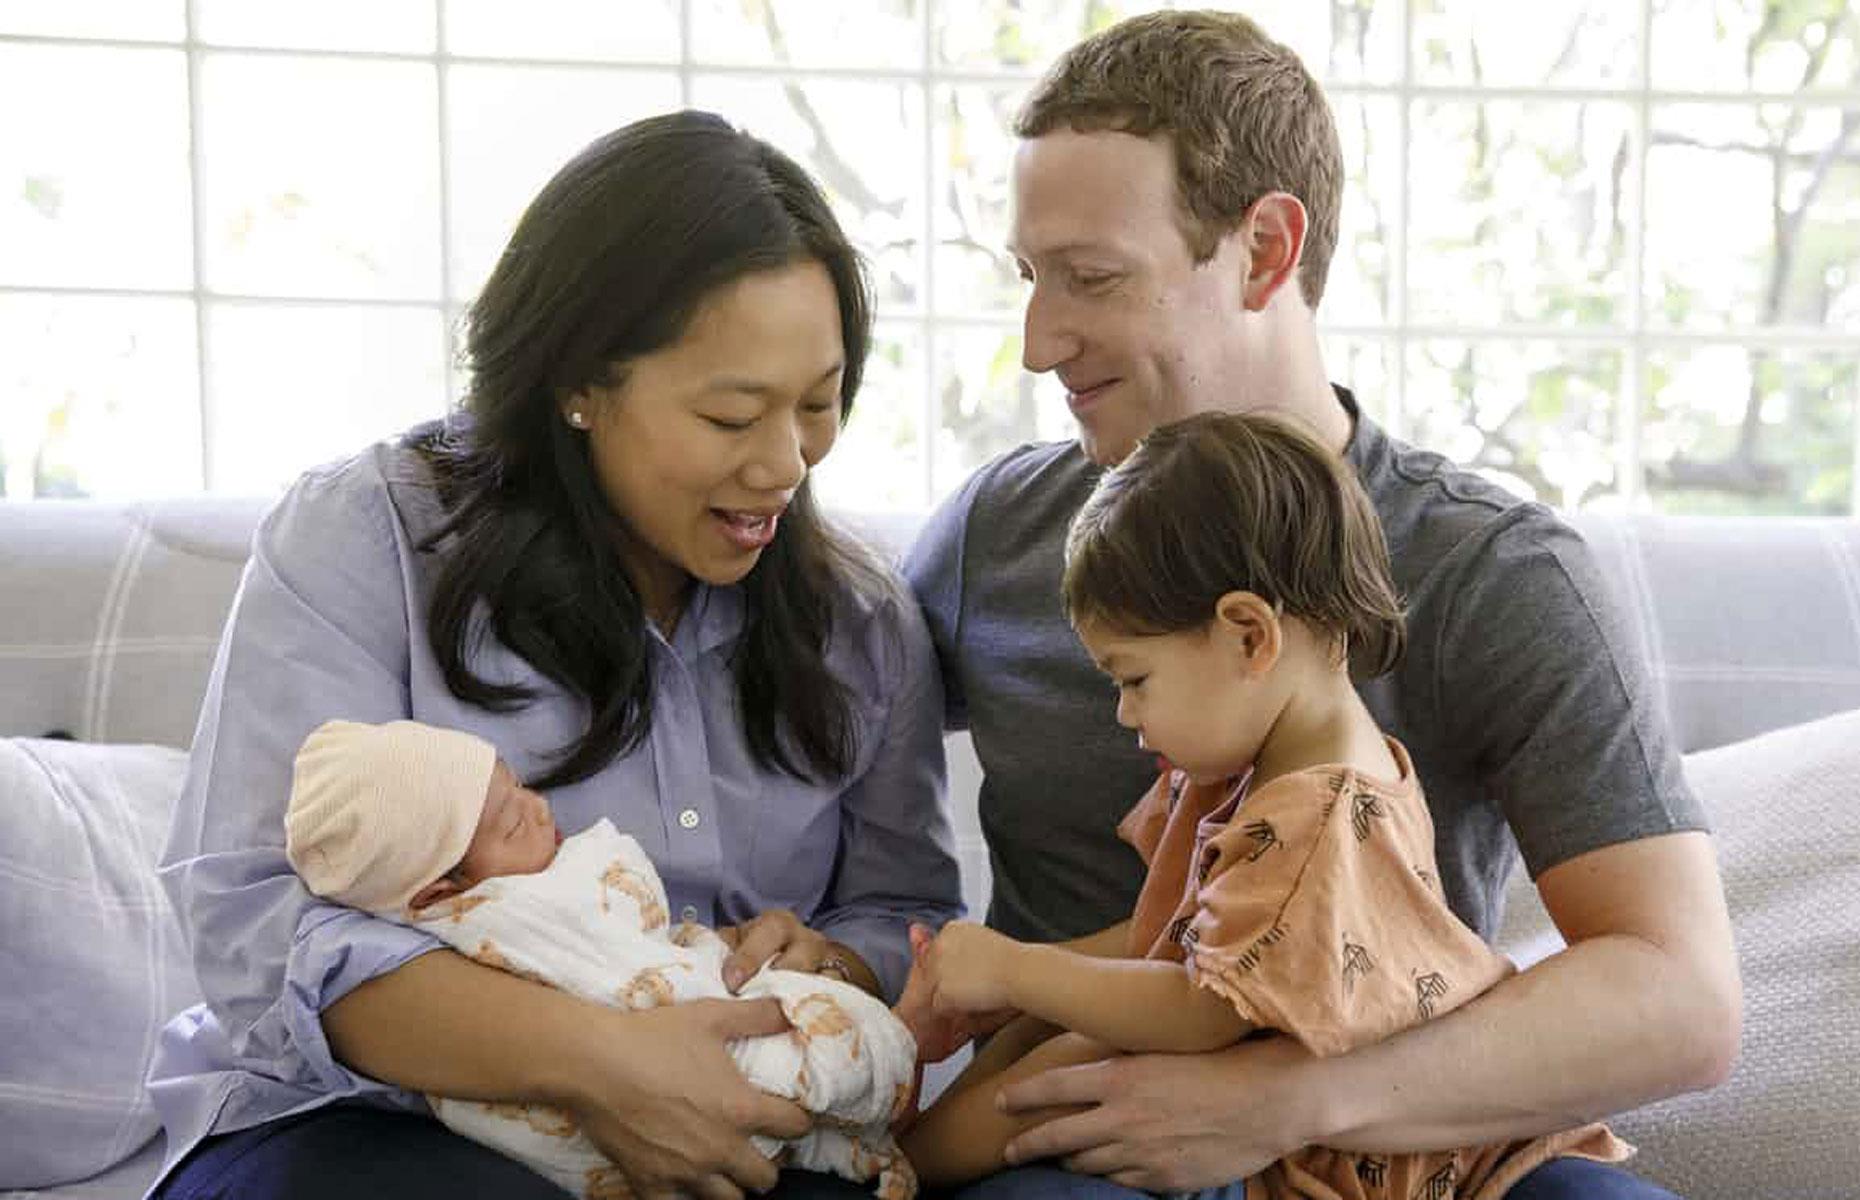 California: the Zuckerberg family – $77.4 billion